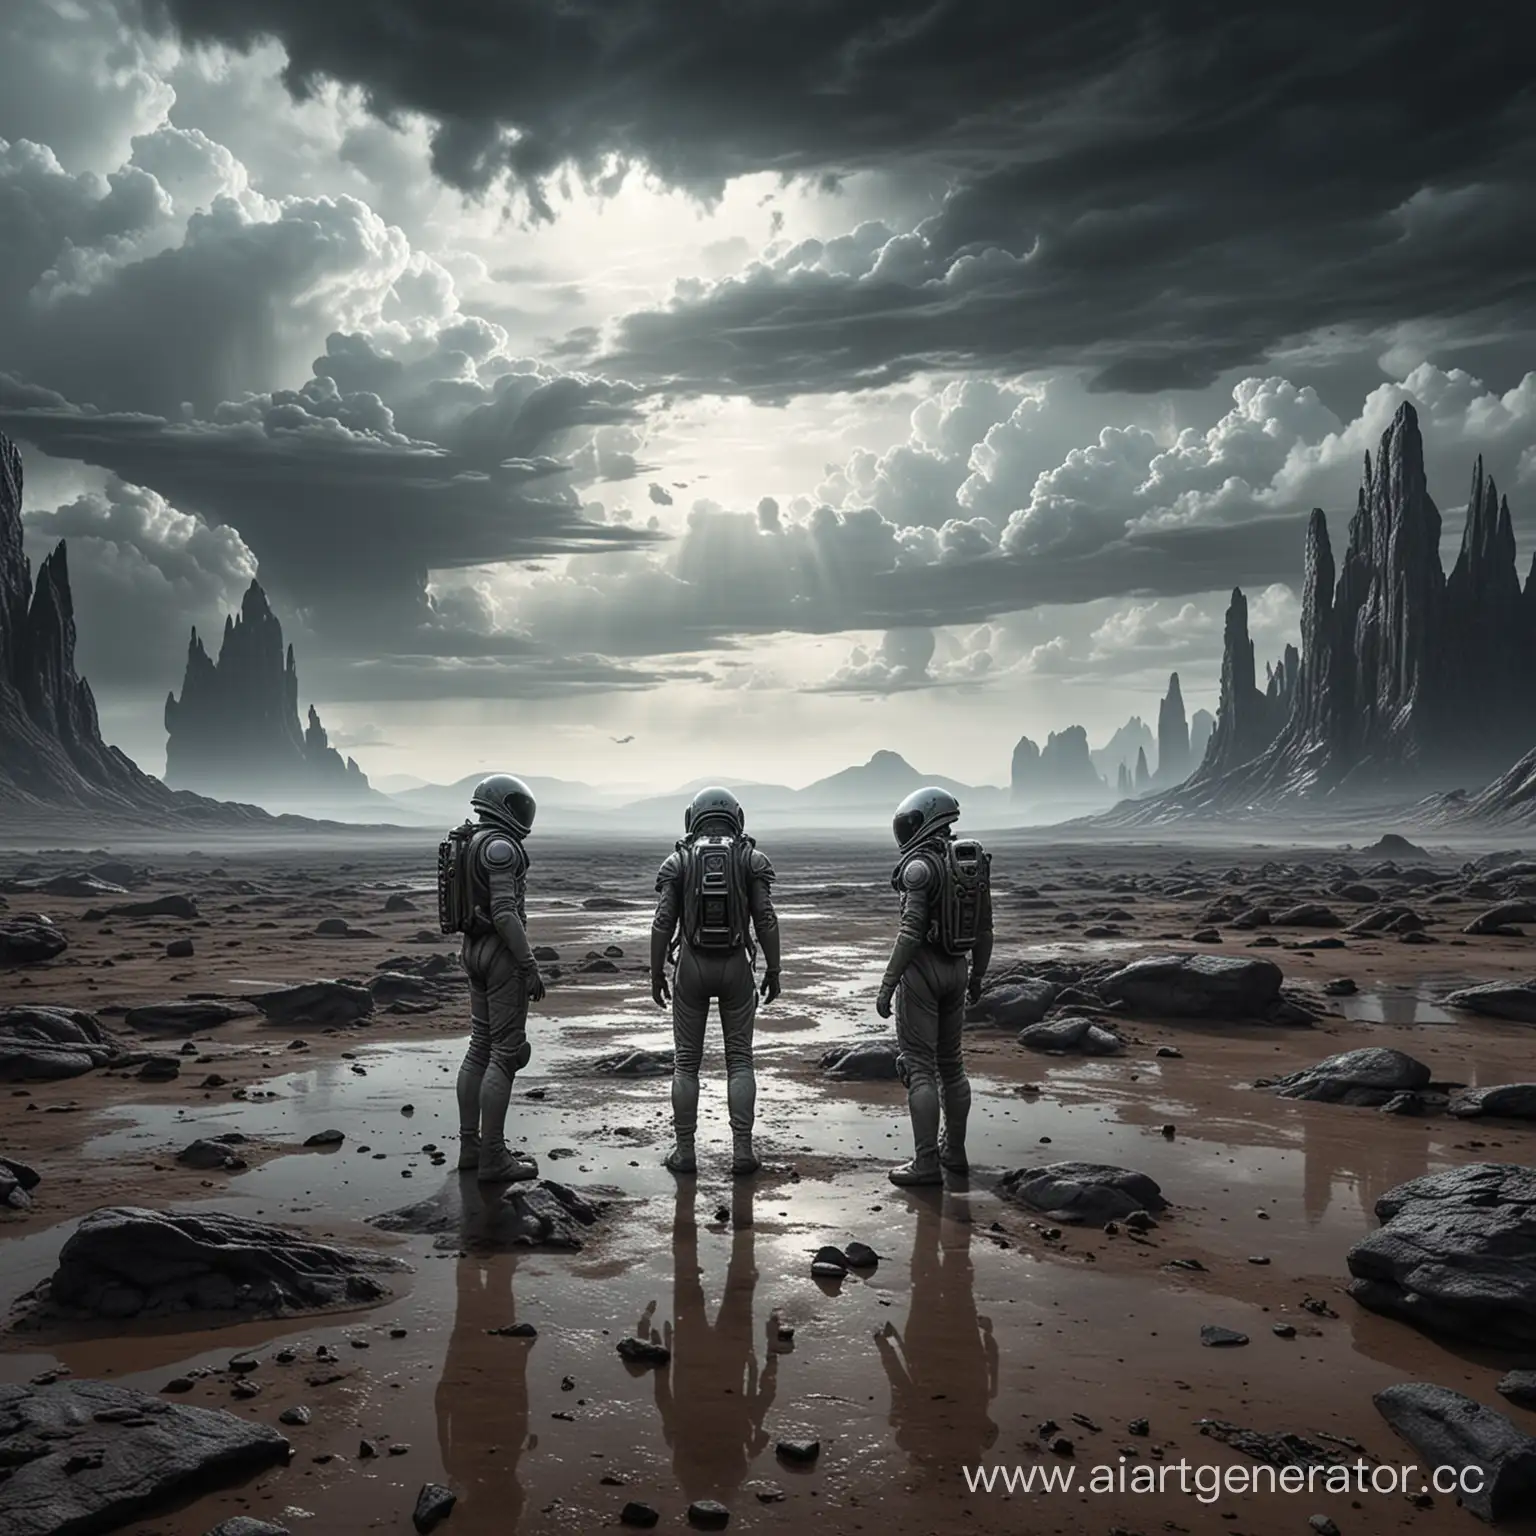 Interstellar-Encounter-Humans-Meeting-Aliens-on-a-Desolate-Alien-Landscape